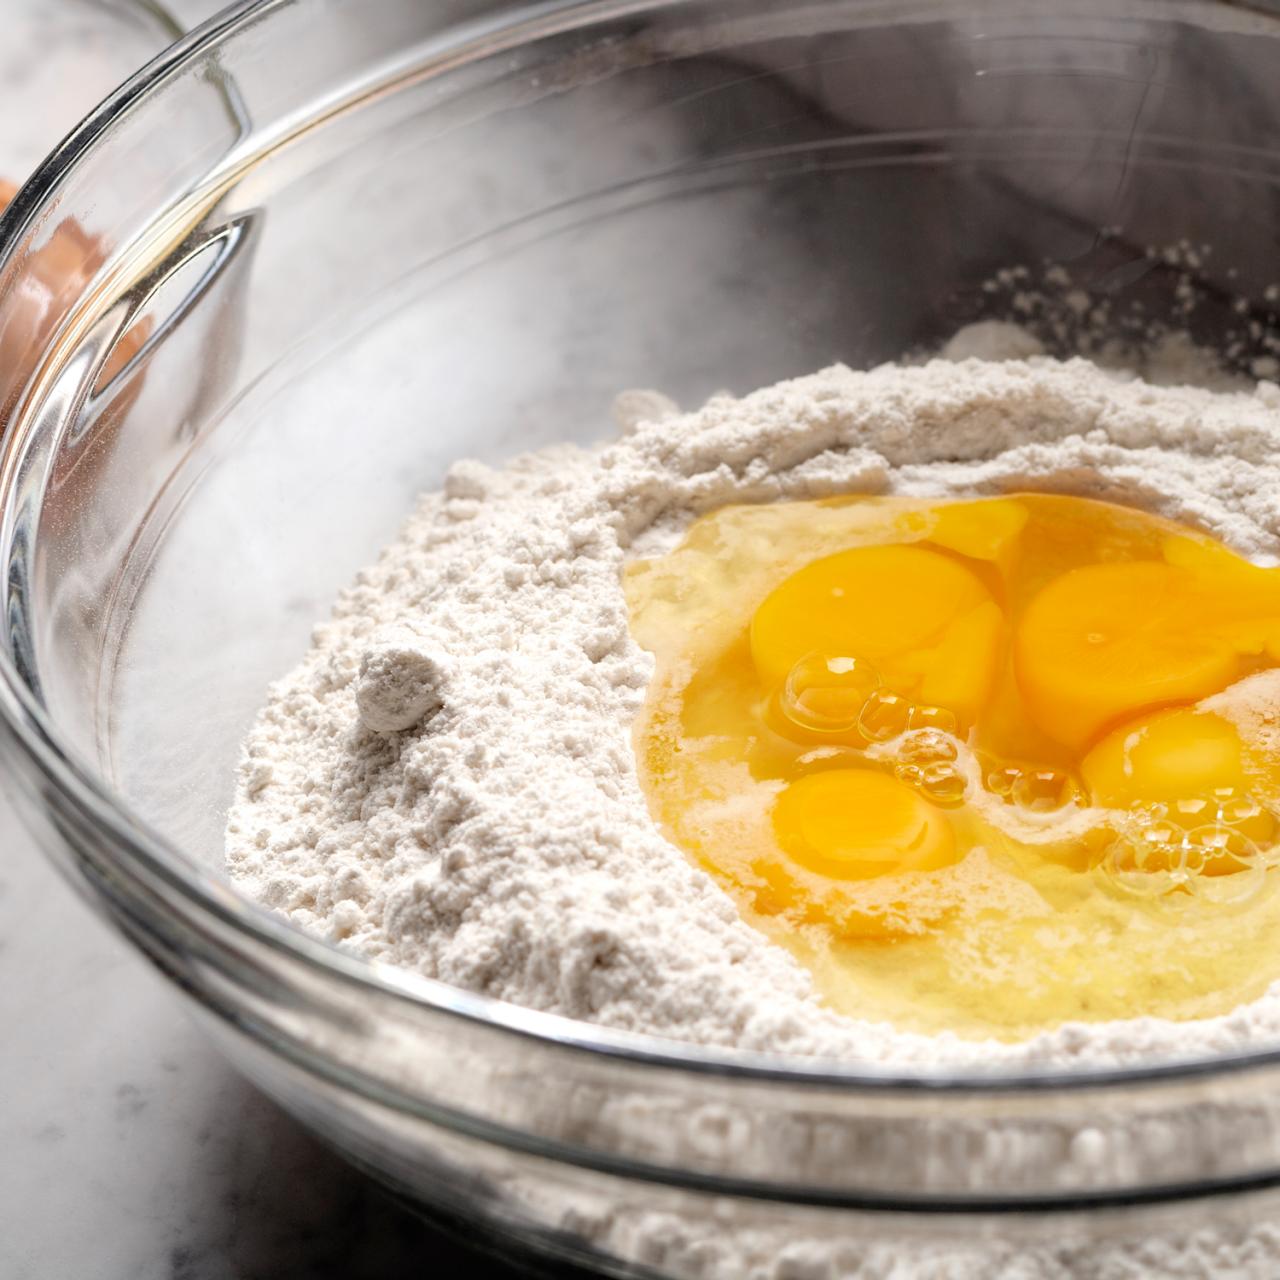 Large Eggs vs. Extra Large Eggs in baking - Baking Bites